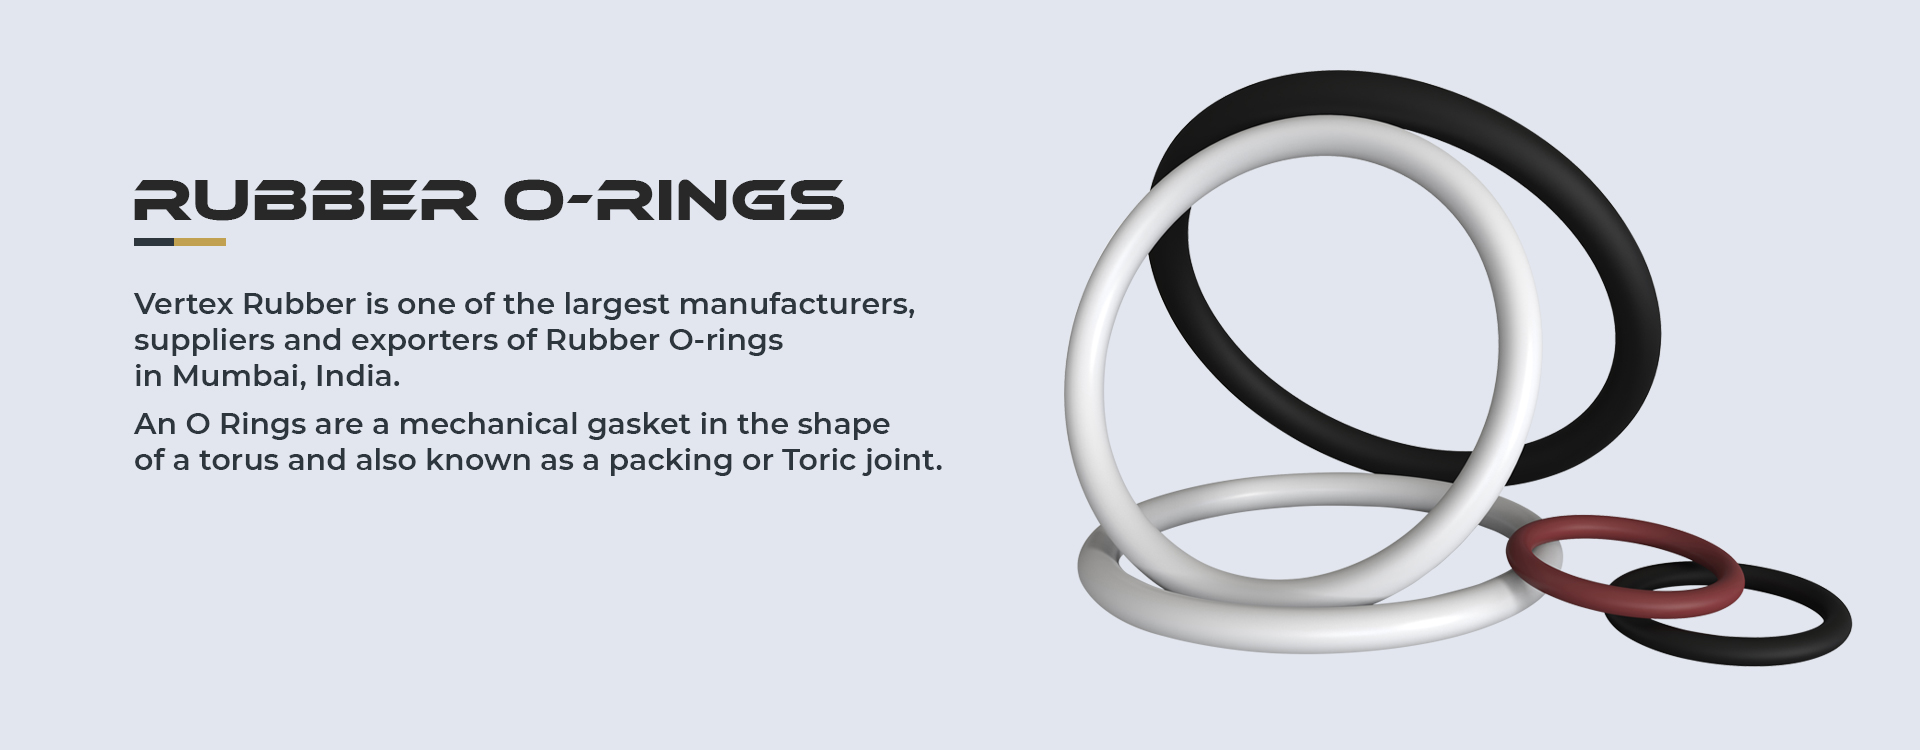 Rubber O Rings